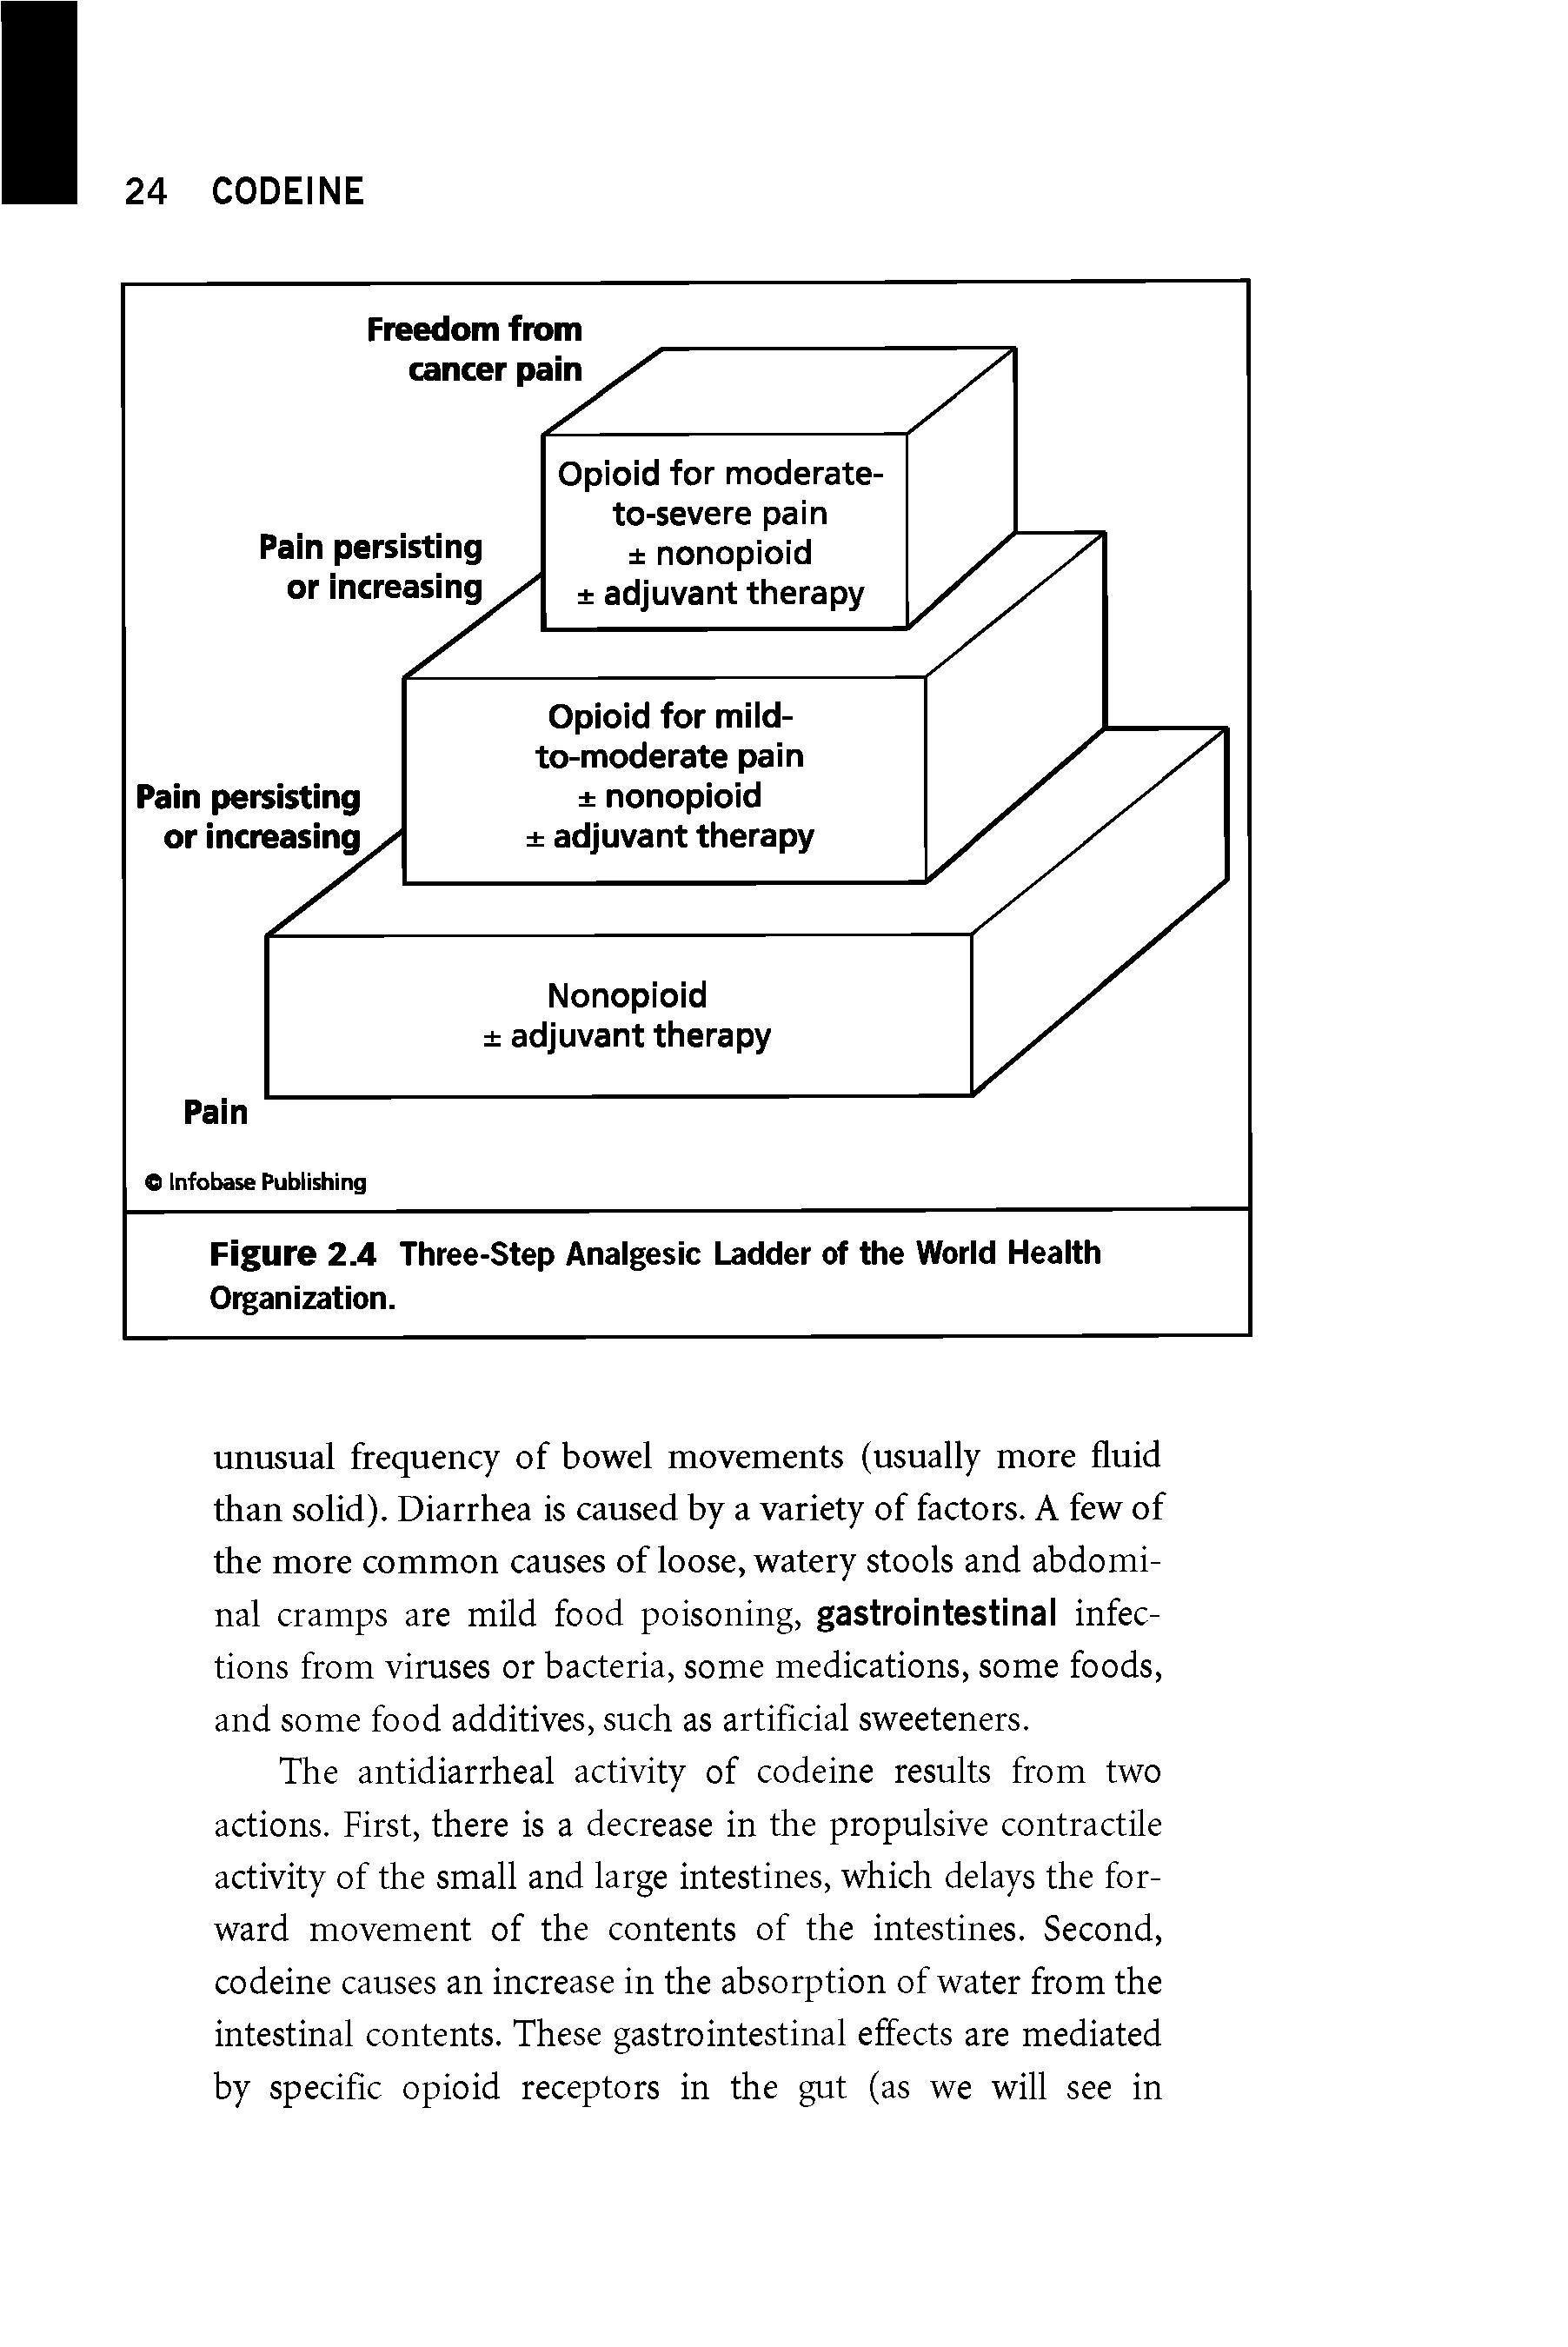 Figure 2.4 Three-Step Analgesic Ladder of the World Health Organization.